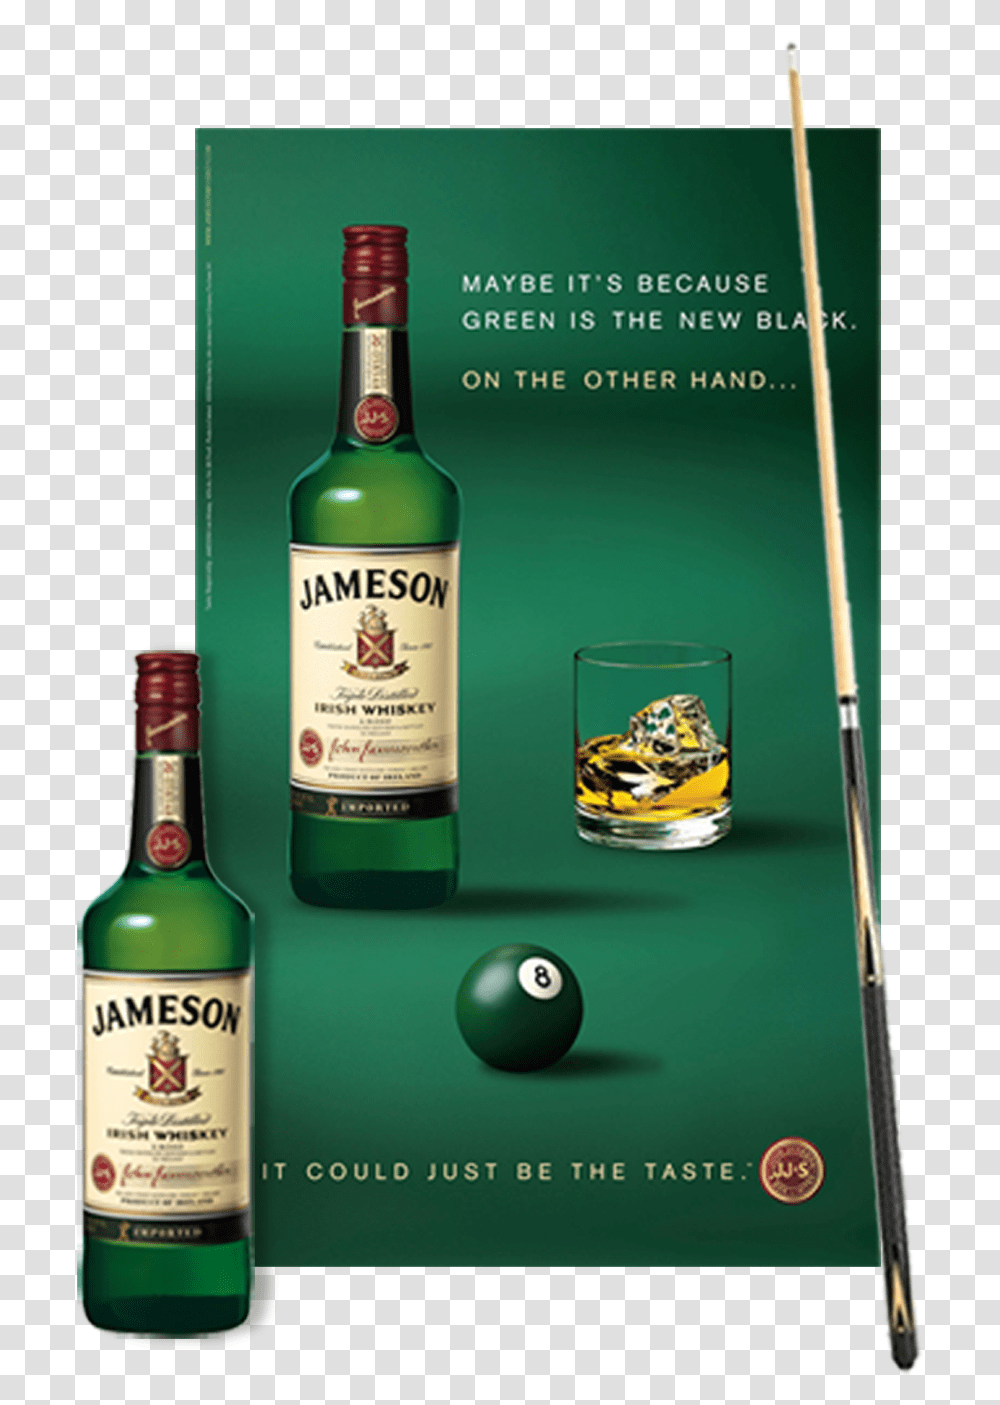 Jameson Irish Whiskey Image Alcohol, Liquor, Beverage, Drink, Whisky Transparent Png